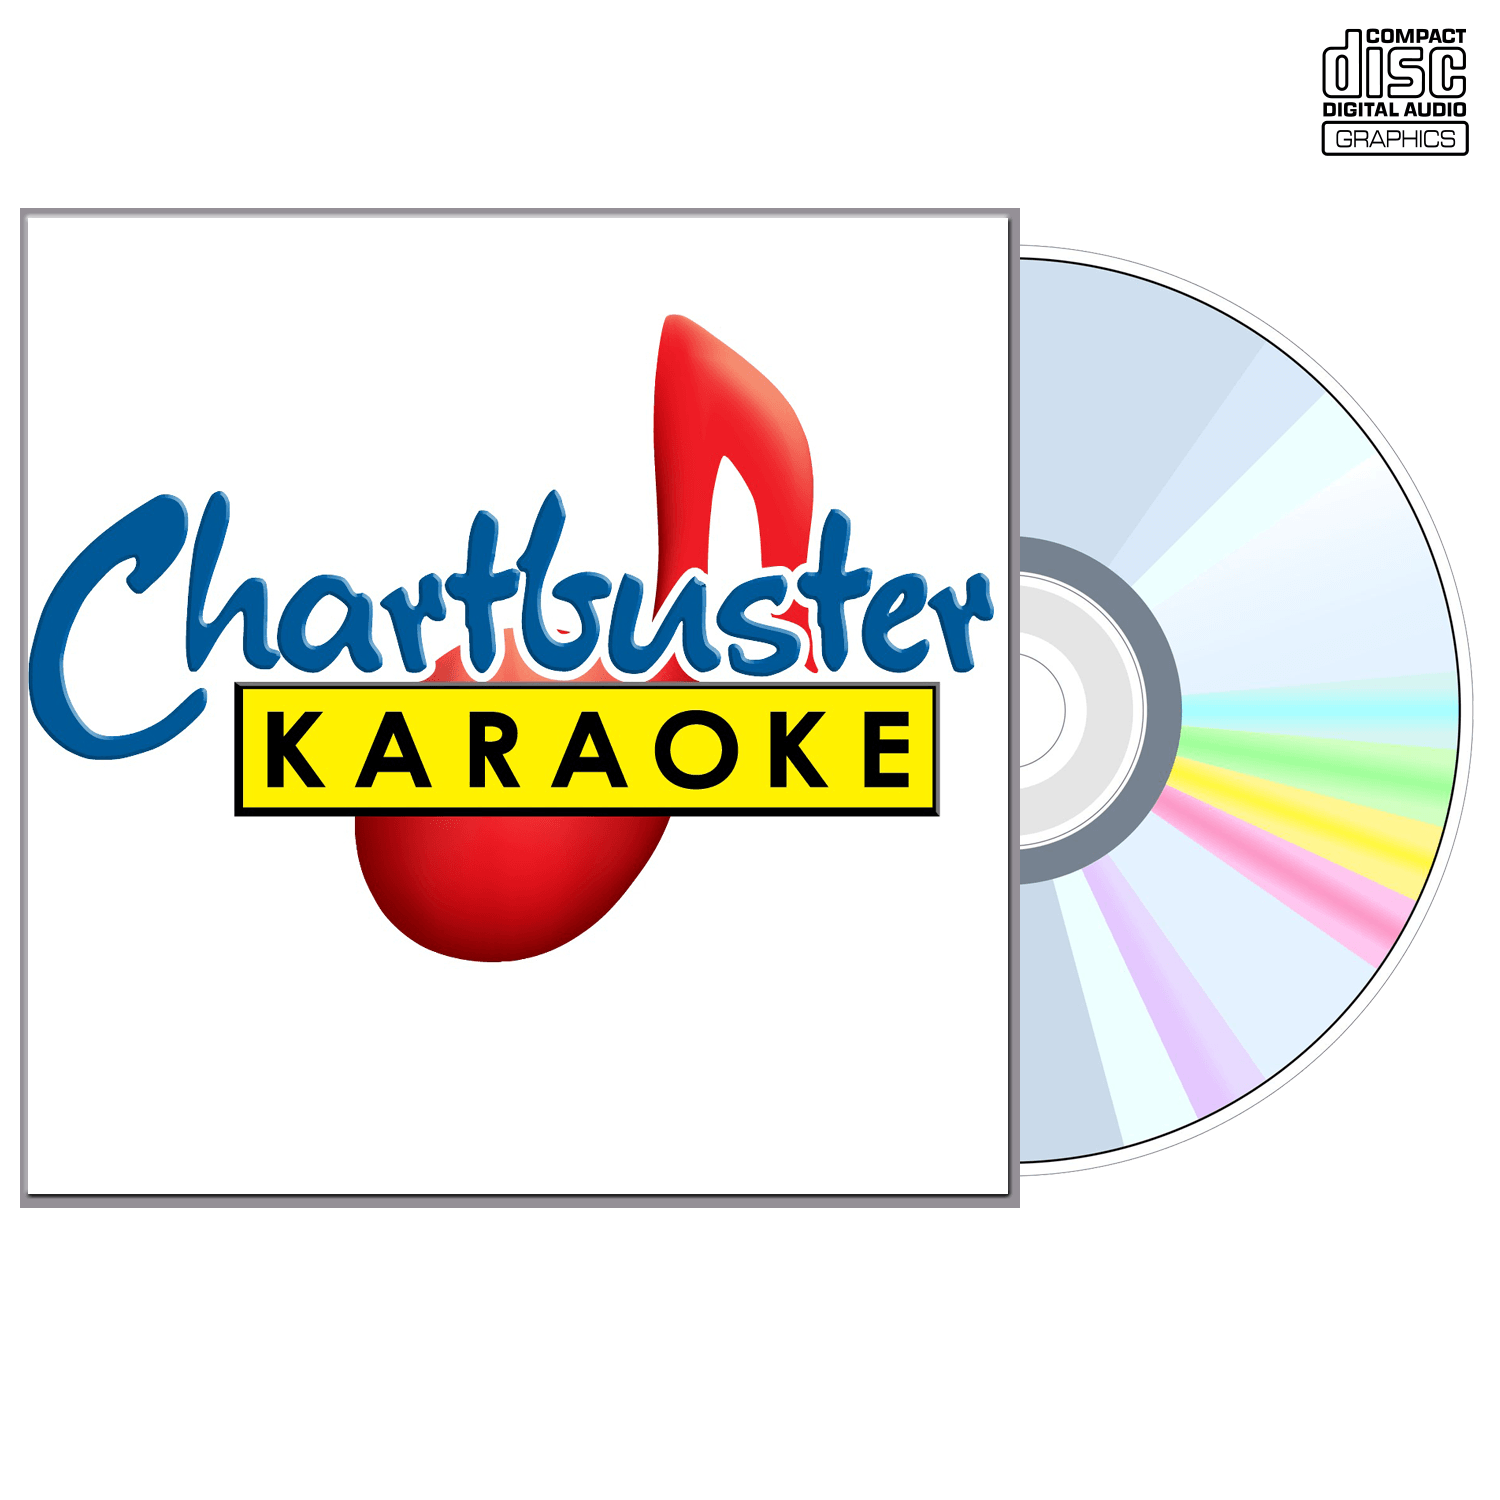 Hank Williams Jr Vol 2 - CD+G - Chartbuster Karaoke - Karaoke Home Entertainment